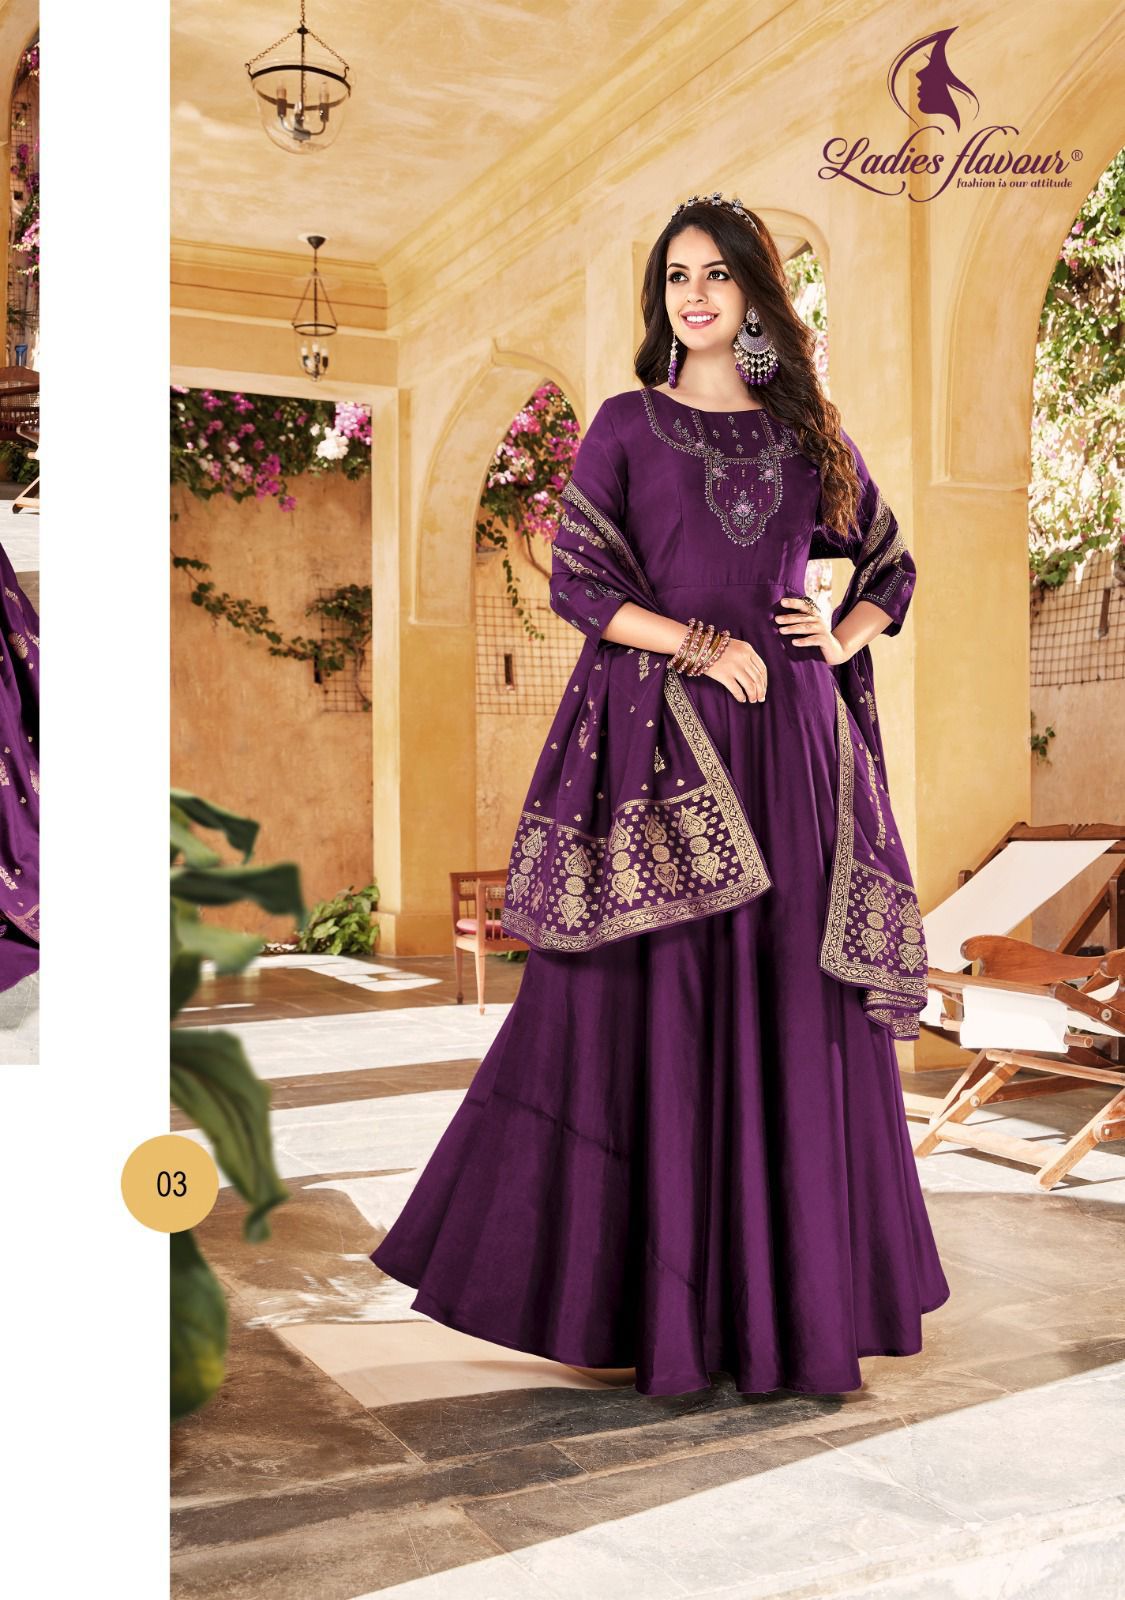 Rangrez Ladies Flavour Silk Gown Dupatta Set